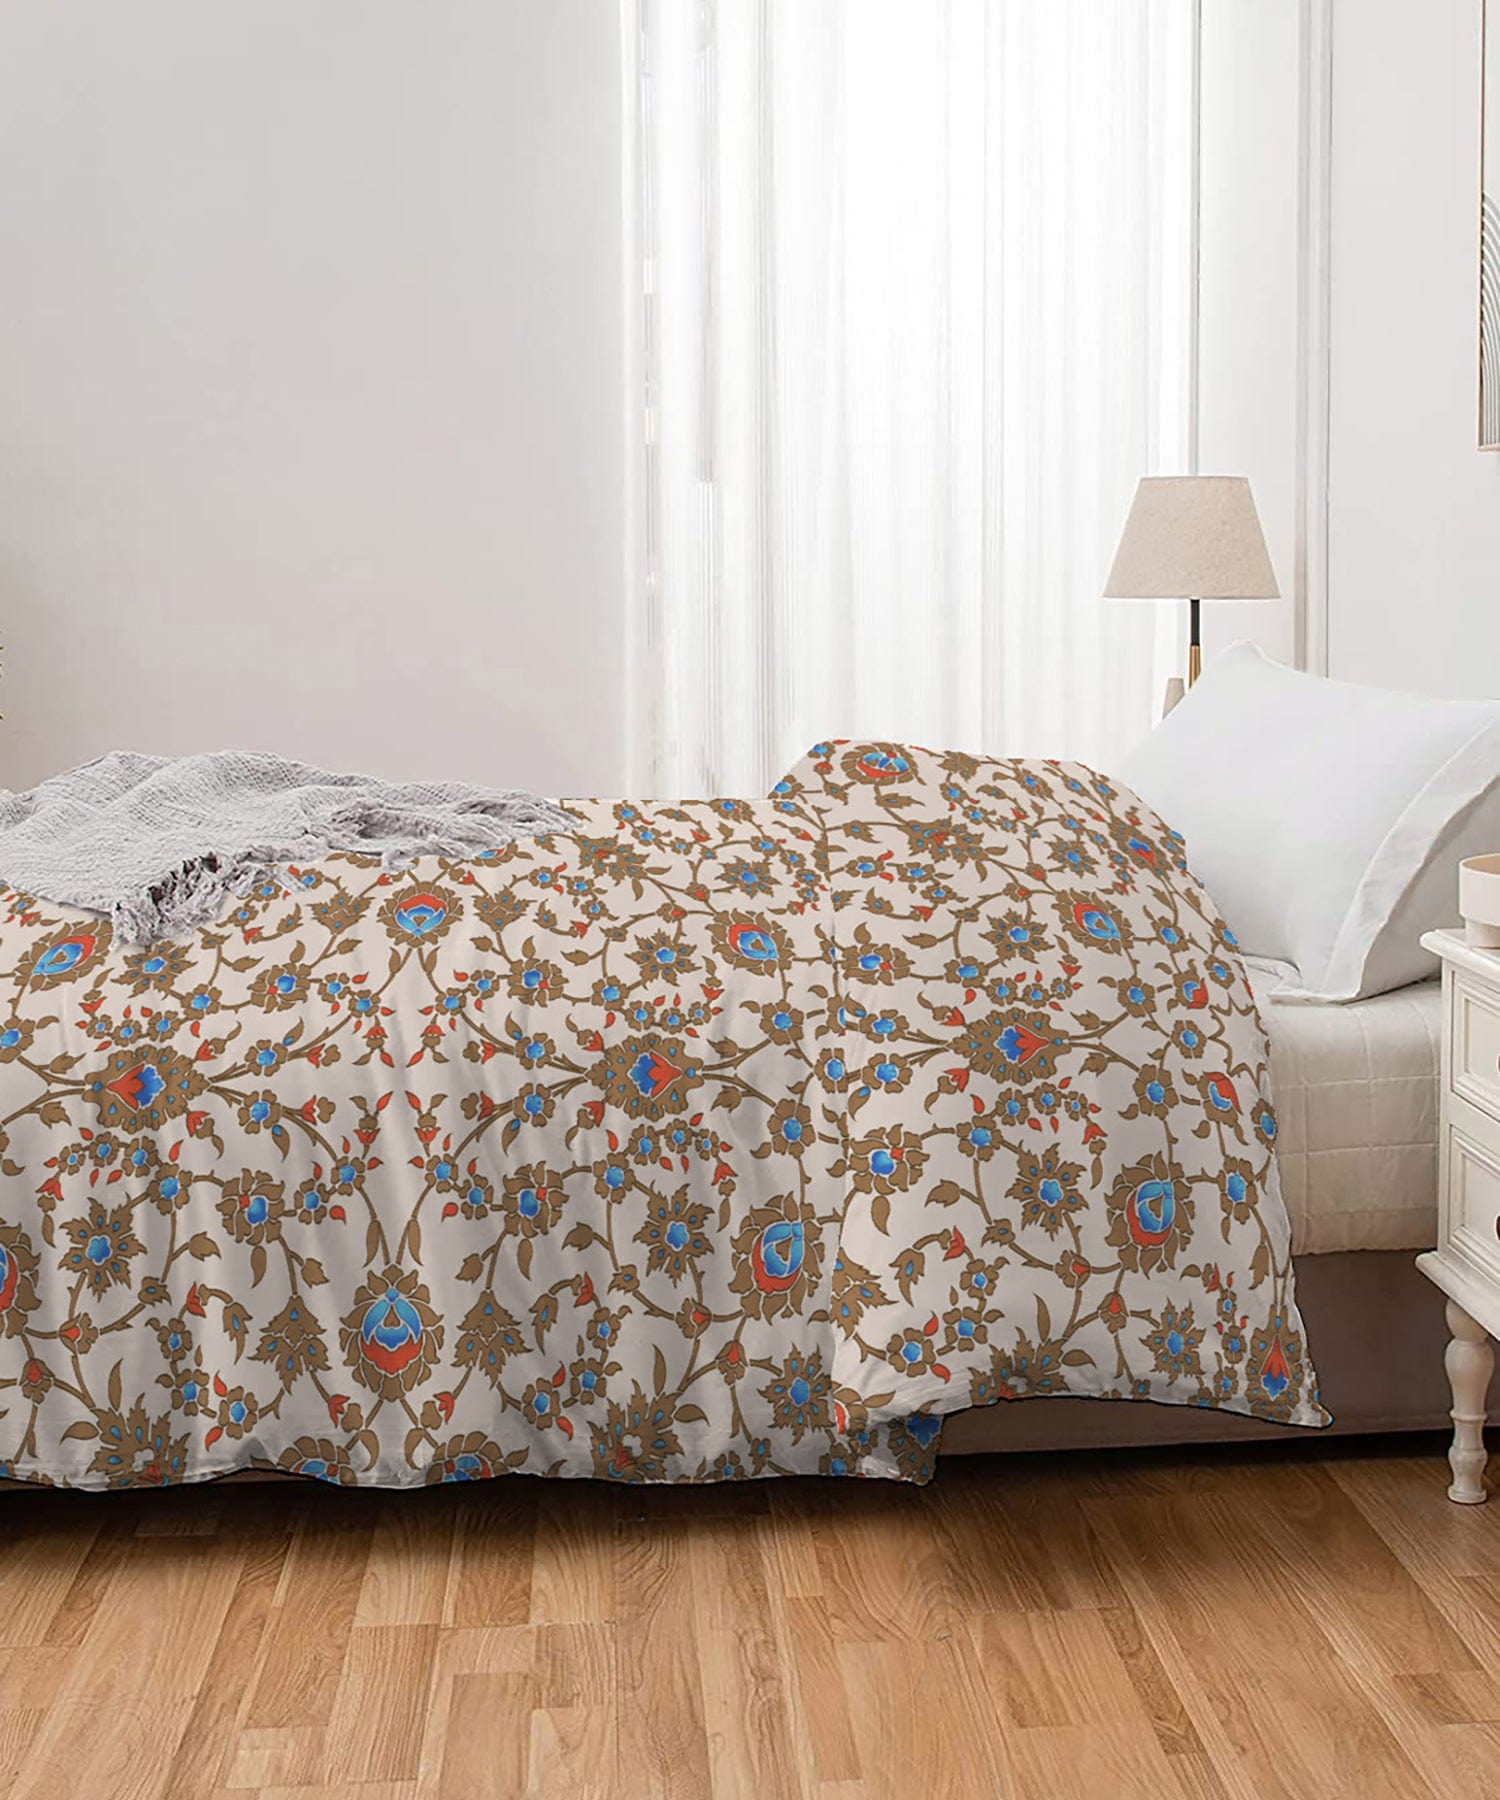 Single Comforter ₹1799/-